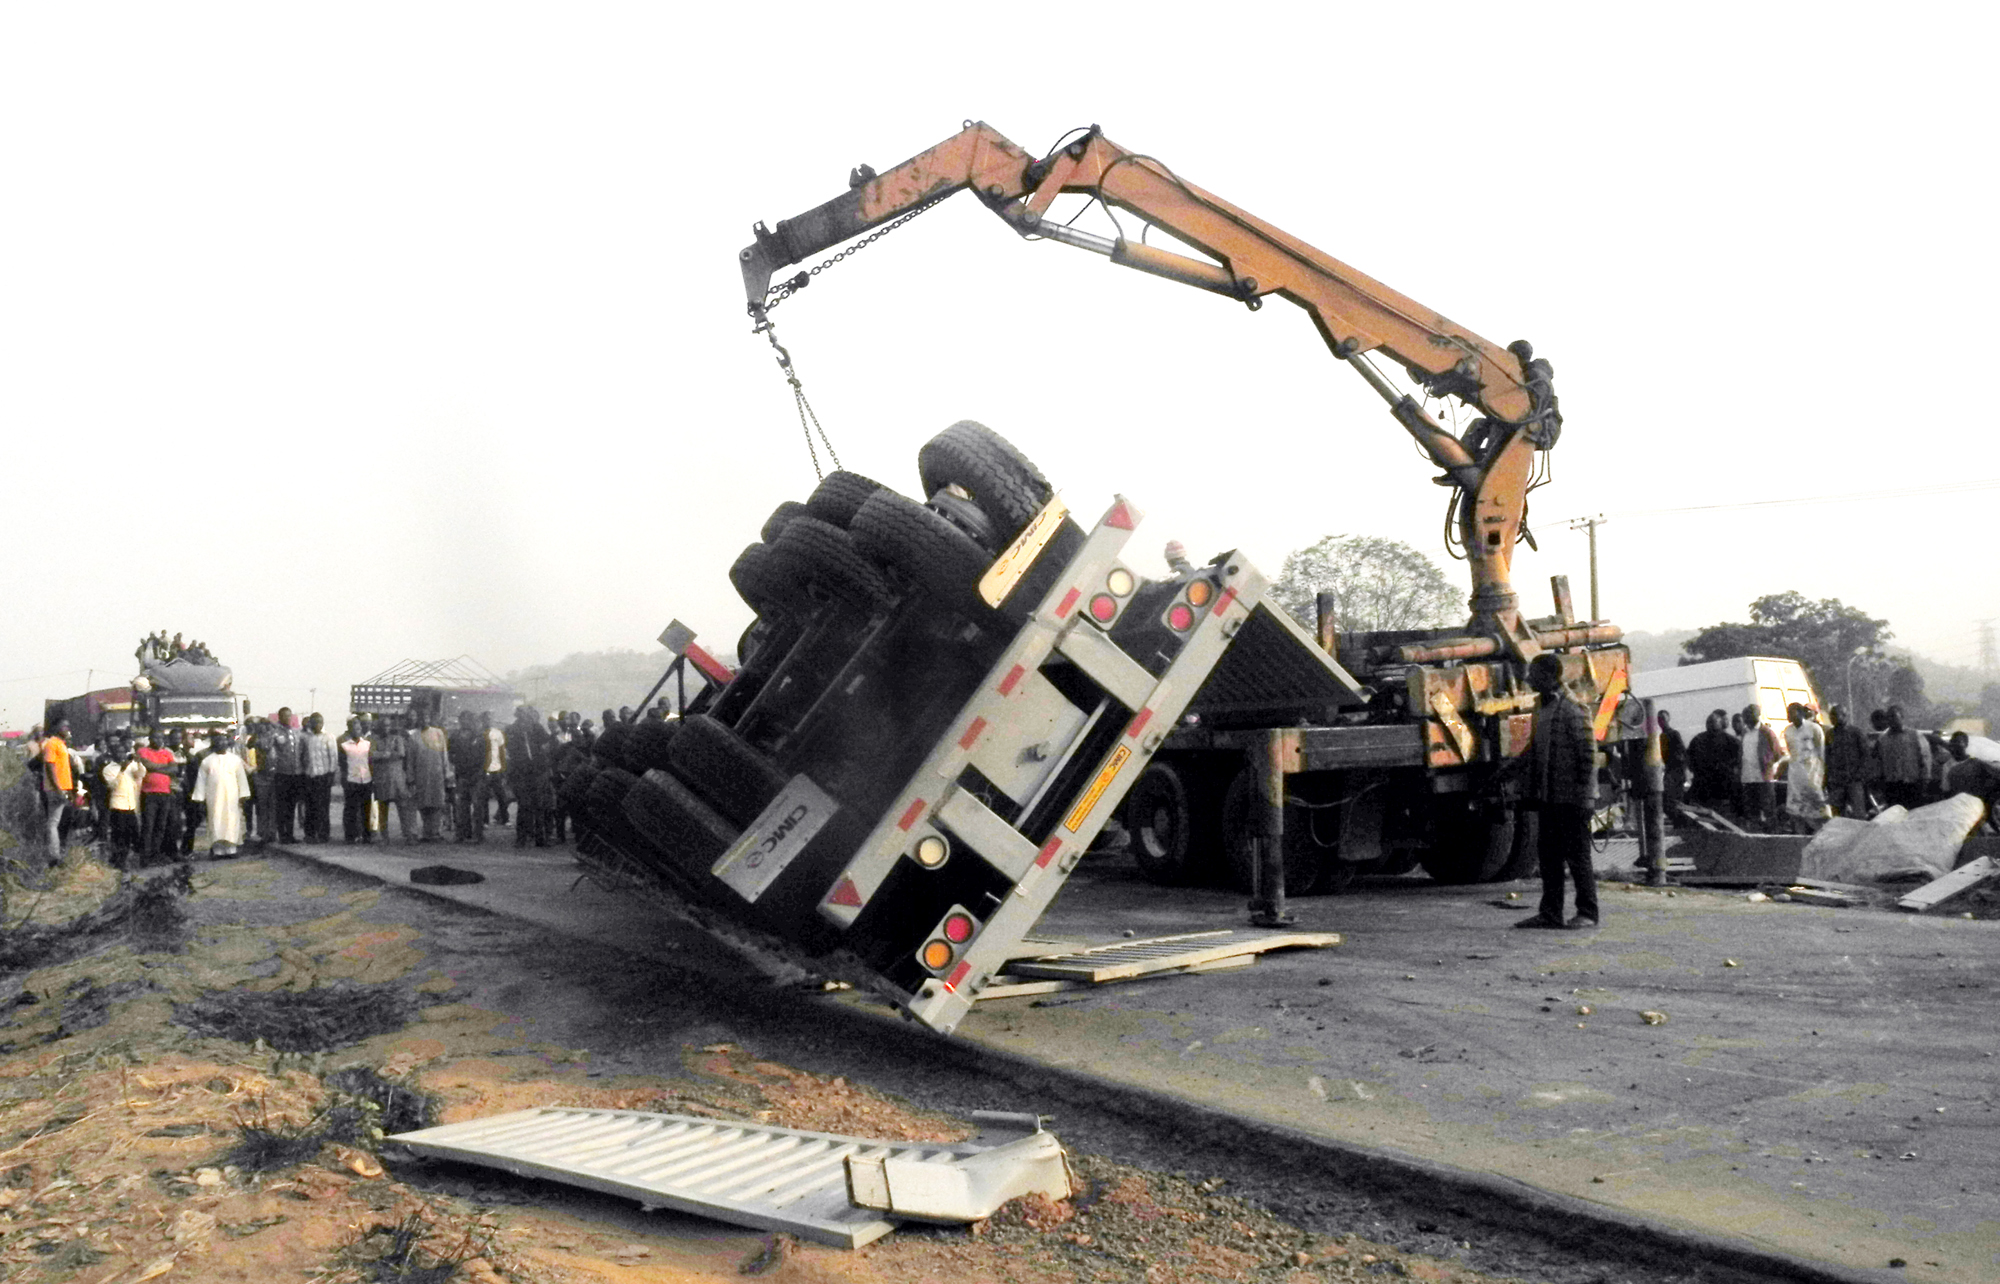 Accident In Abuja Causes Traffic Jam Near Zuma Rock (Photos) - Information Nigeria